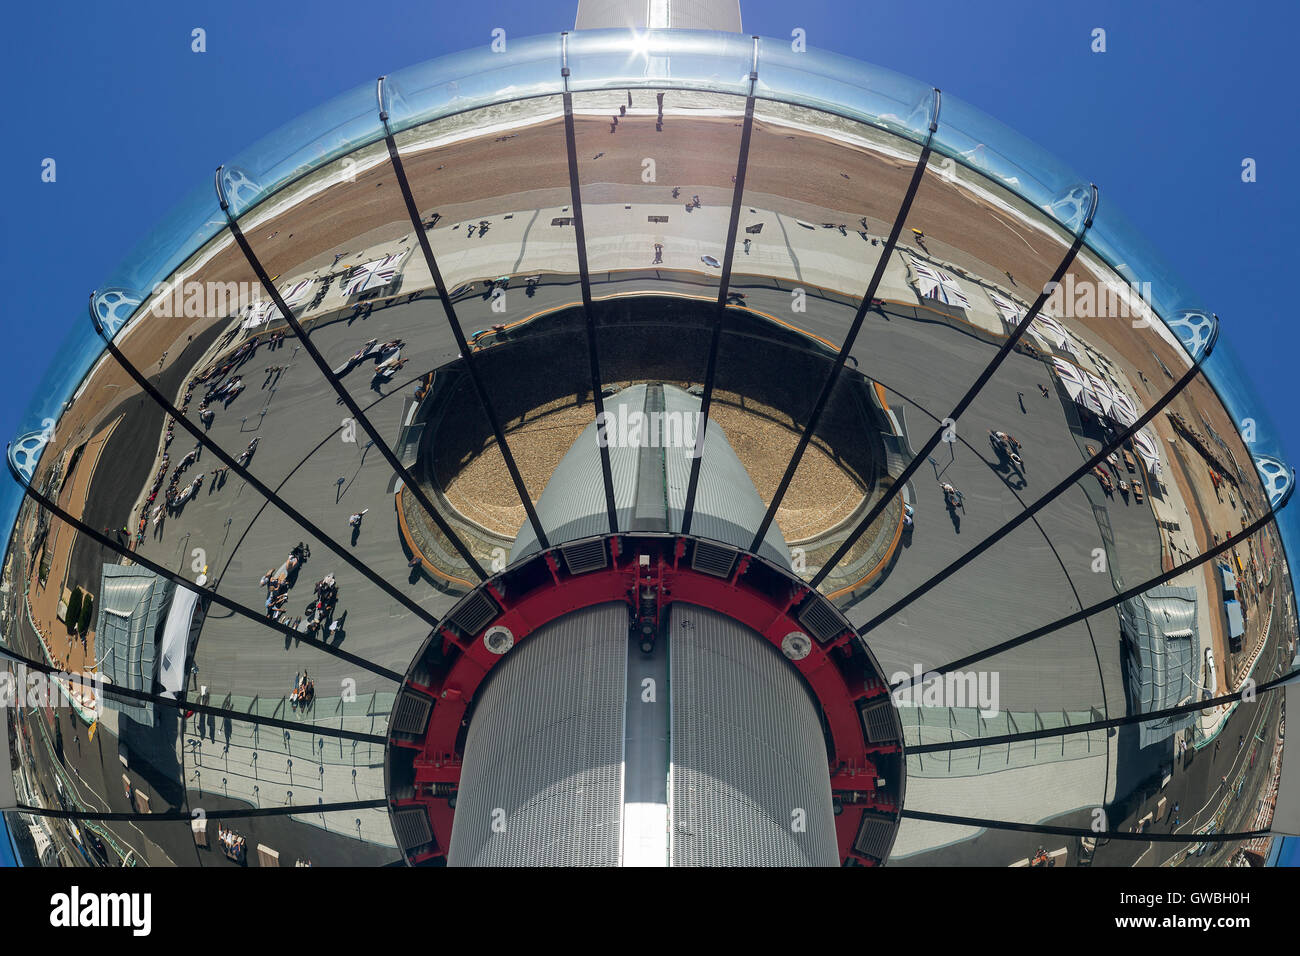 Detail view of i360 pod from underneath. i360, Brighton, United Kingdom. Architect: Marks Barfield Architects, 2016. Stock Photo